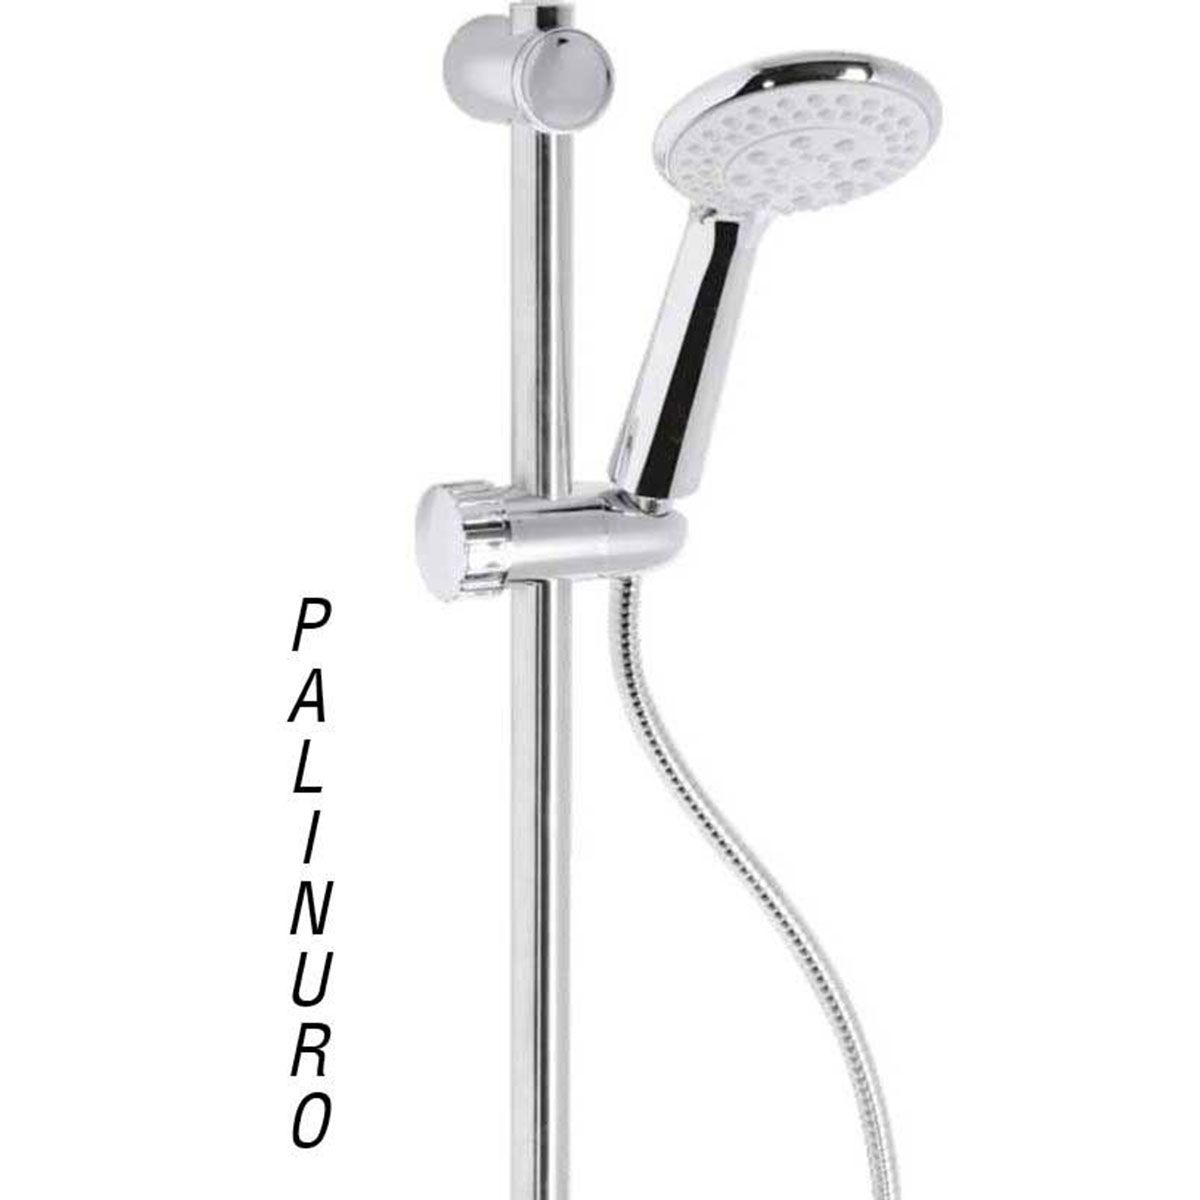 Shower Spare parts Palinuro